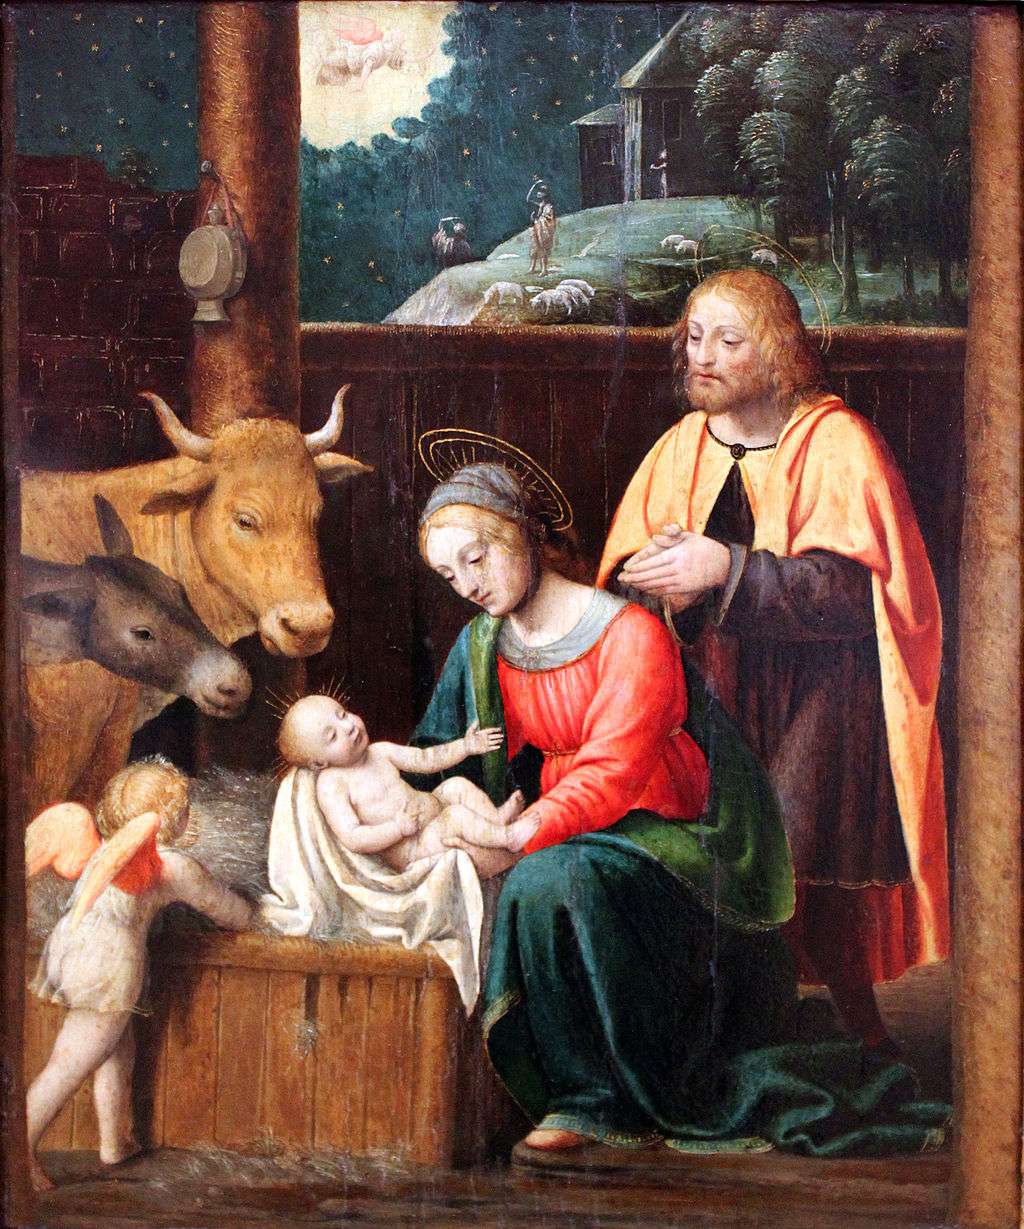 Die Geburt Christi, 1525, [Public domain]